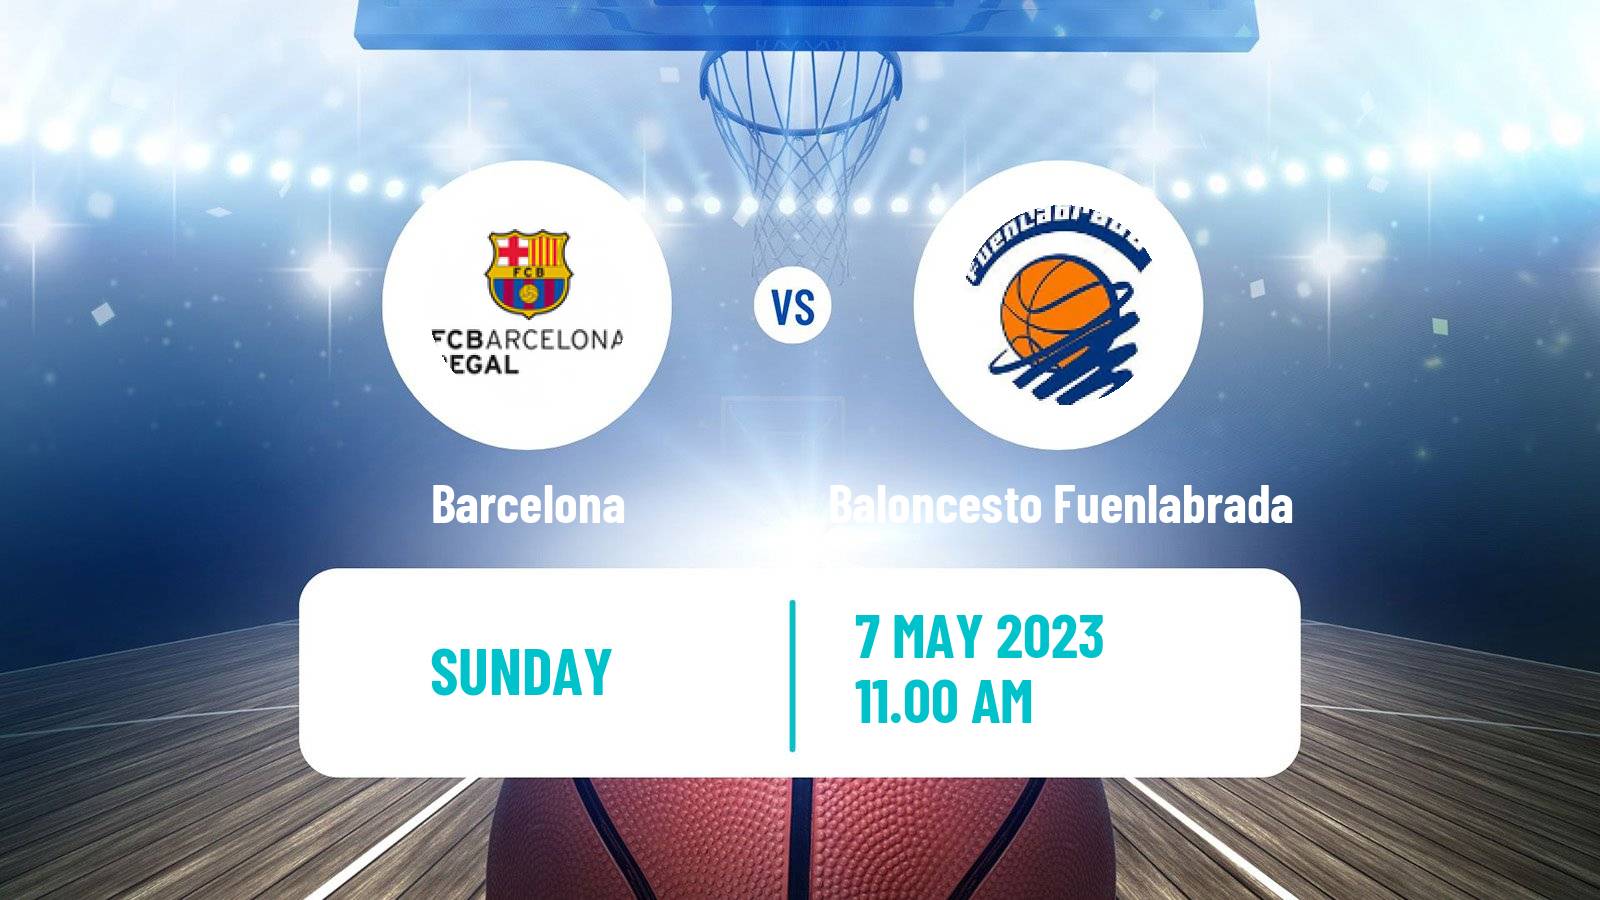 Basketball Spanish ACB League Barcelona - Baloncesto Fuenlabrada